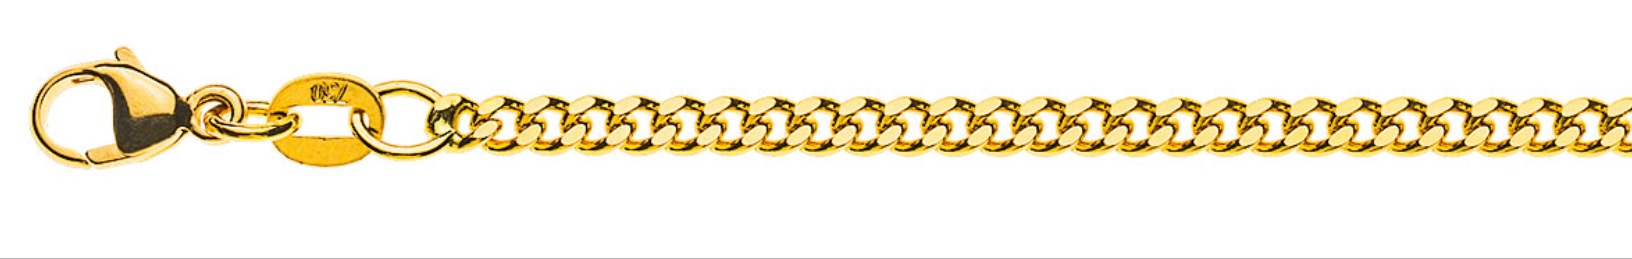 AURONOS Prestige Necklace yellow gold 18K curb chain polished 55cm 2.6mm